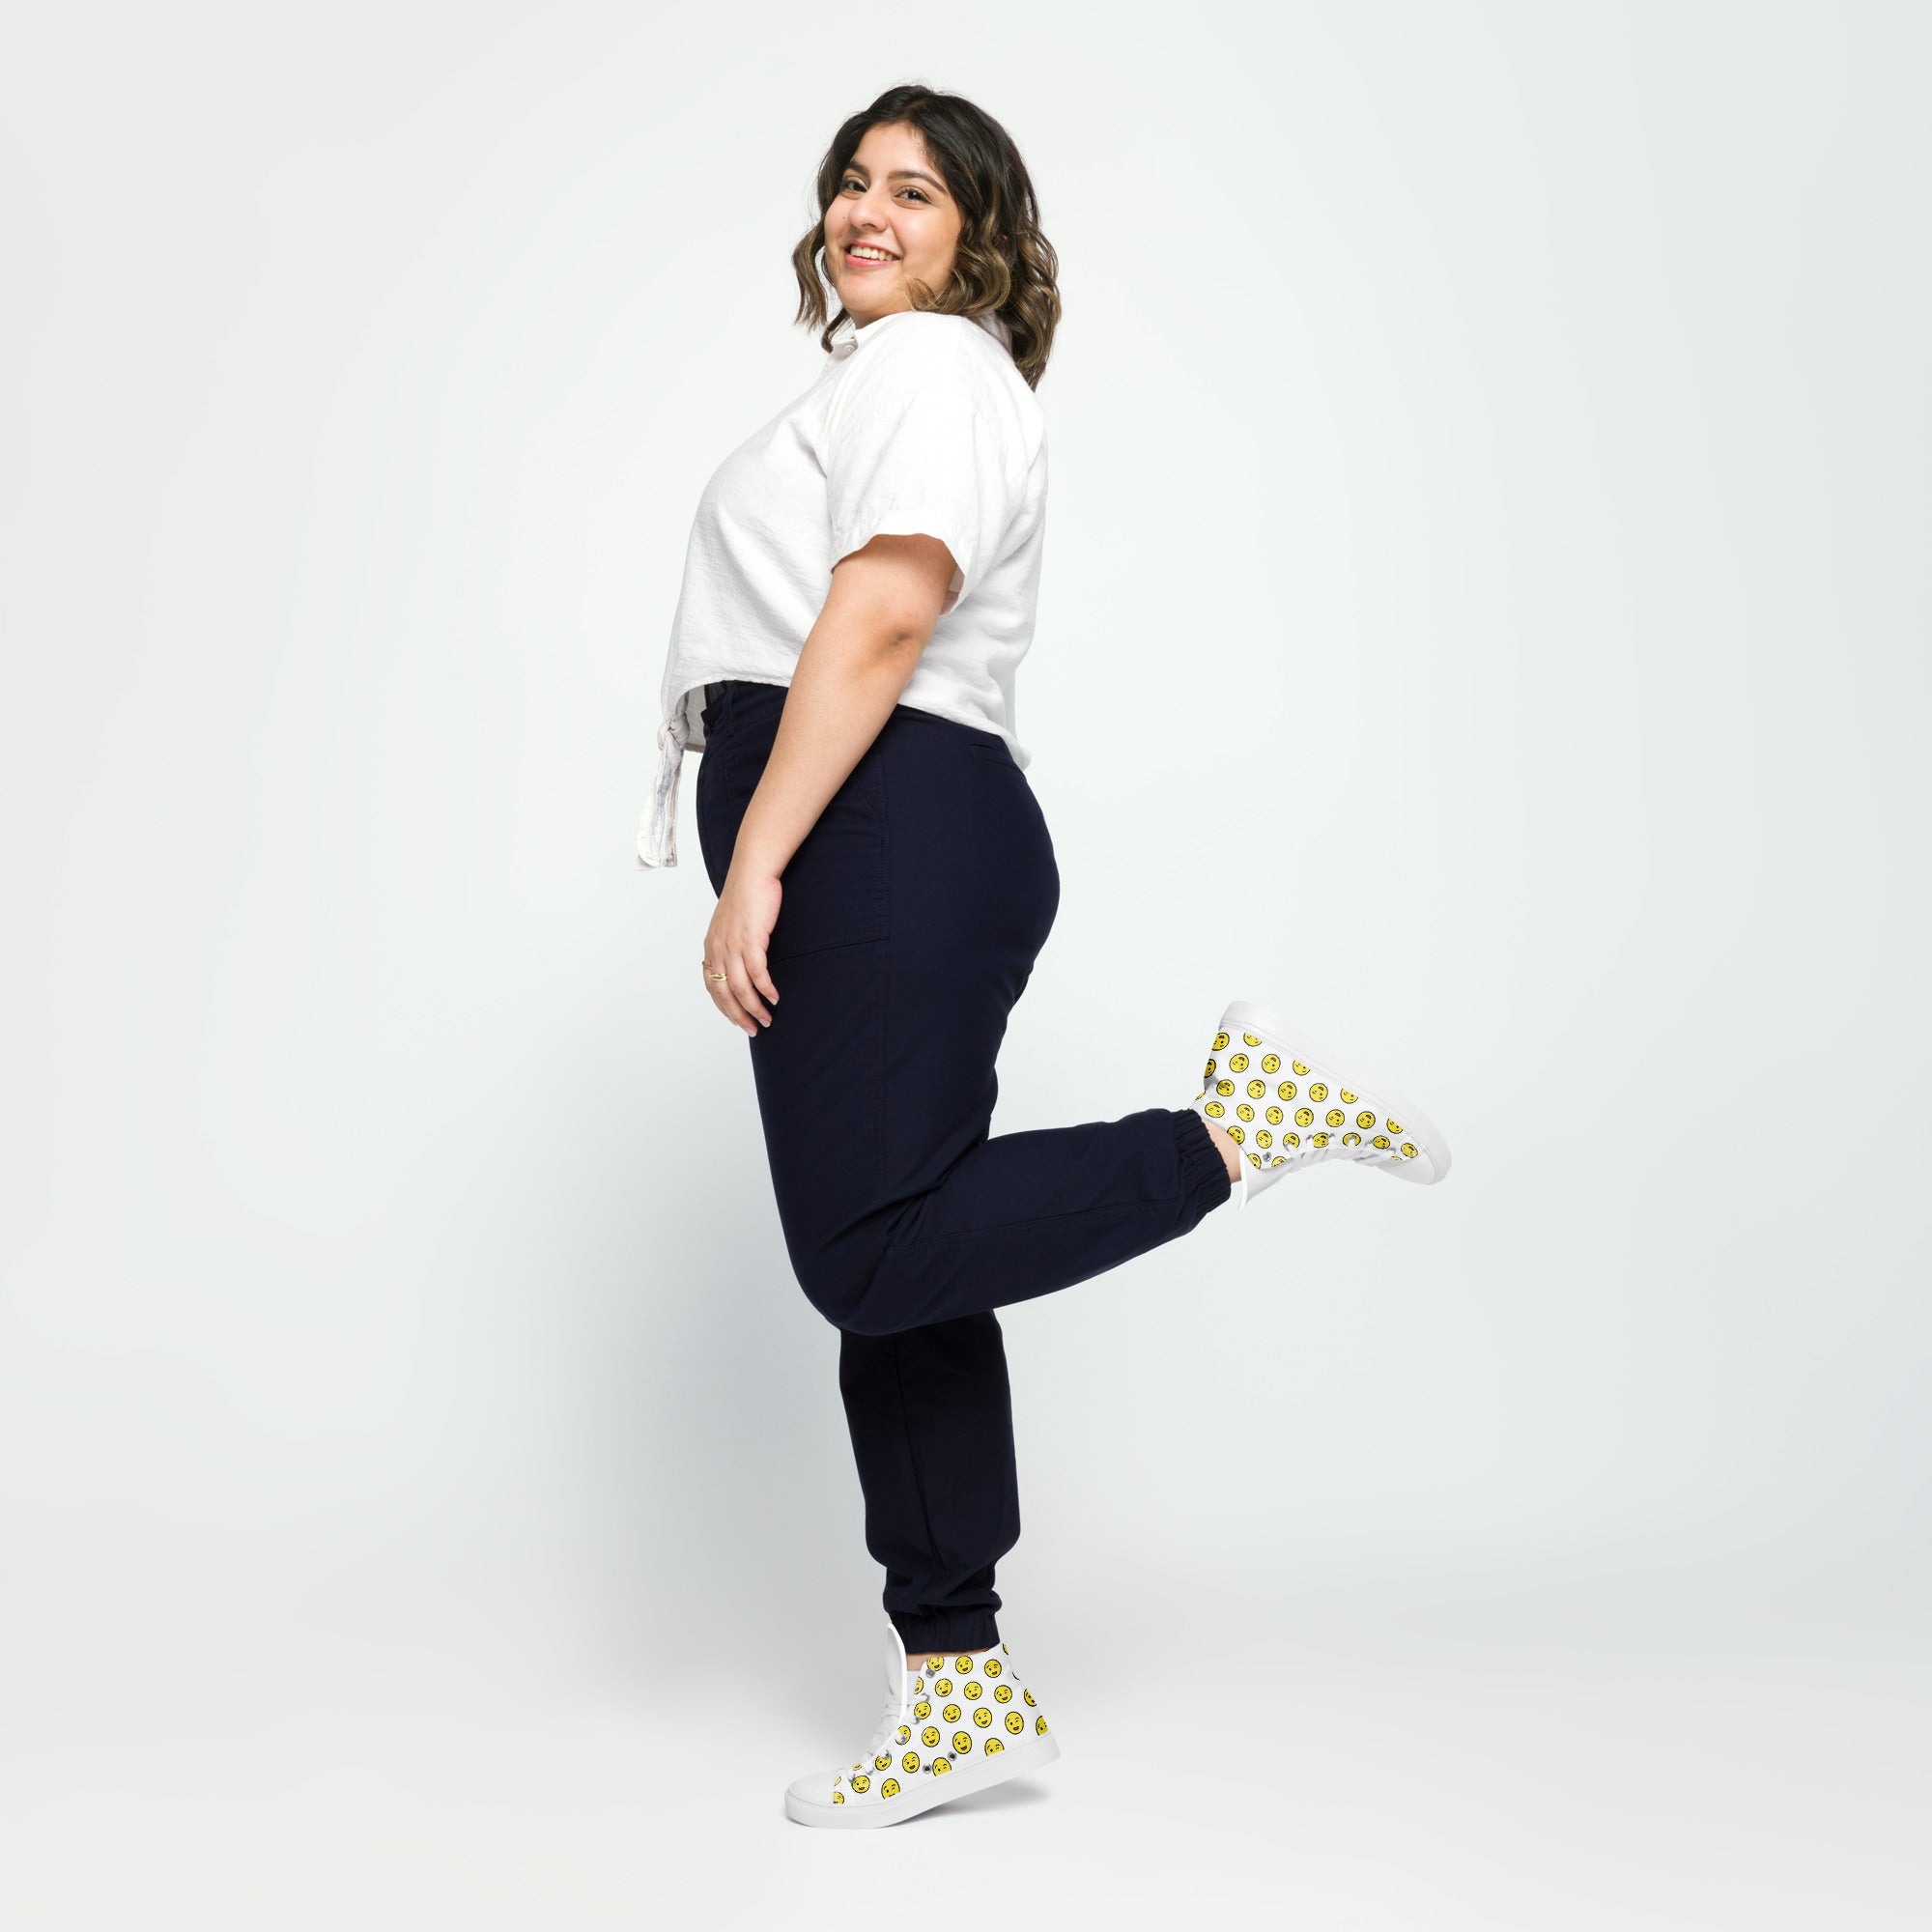 Chitelli's Winking Face Emoji Women's High Top Sneakers